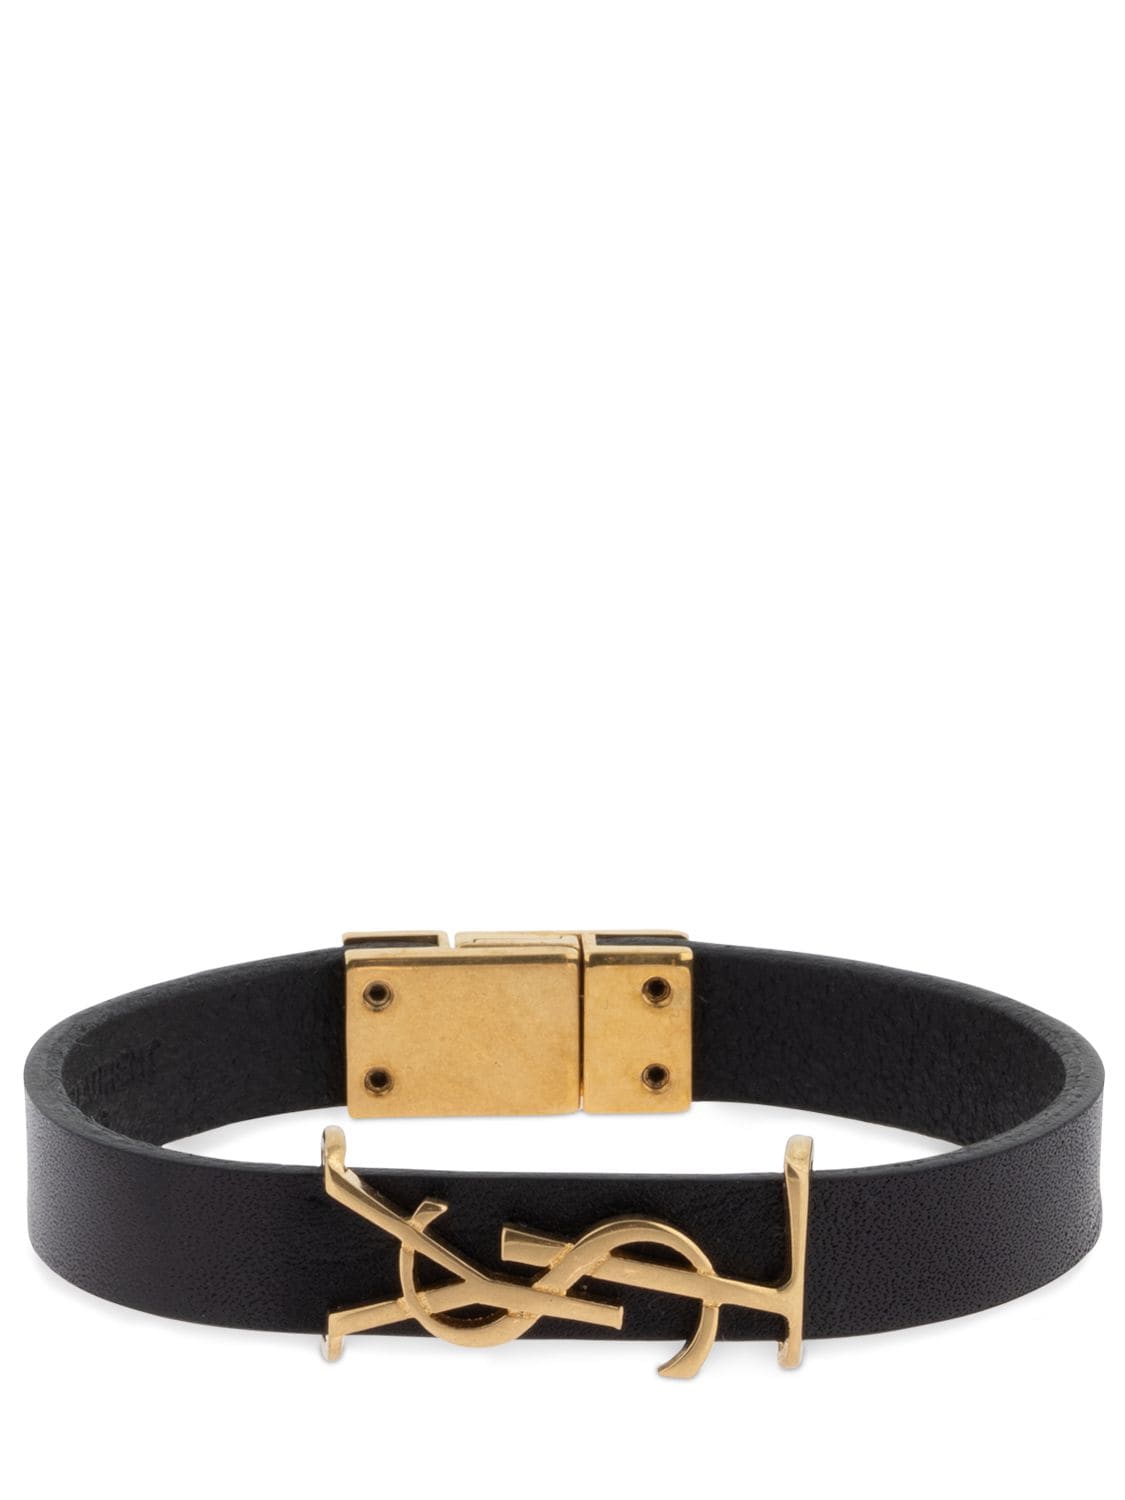 Image of Single Wrap Ysl Leather Bracelet